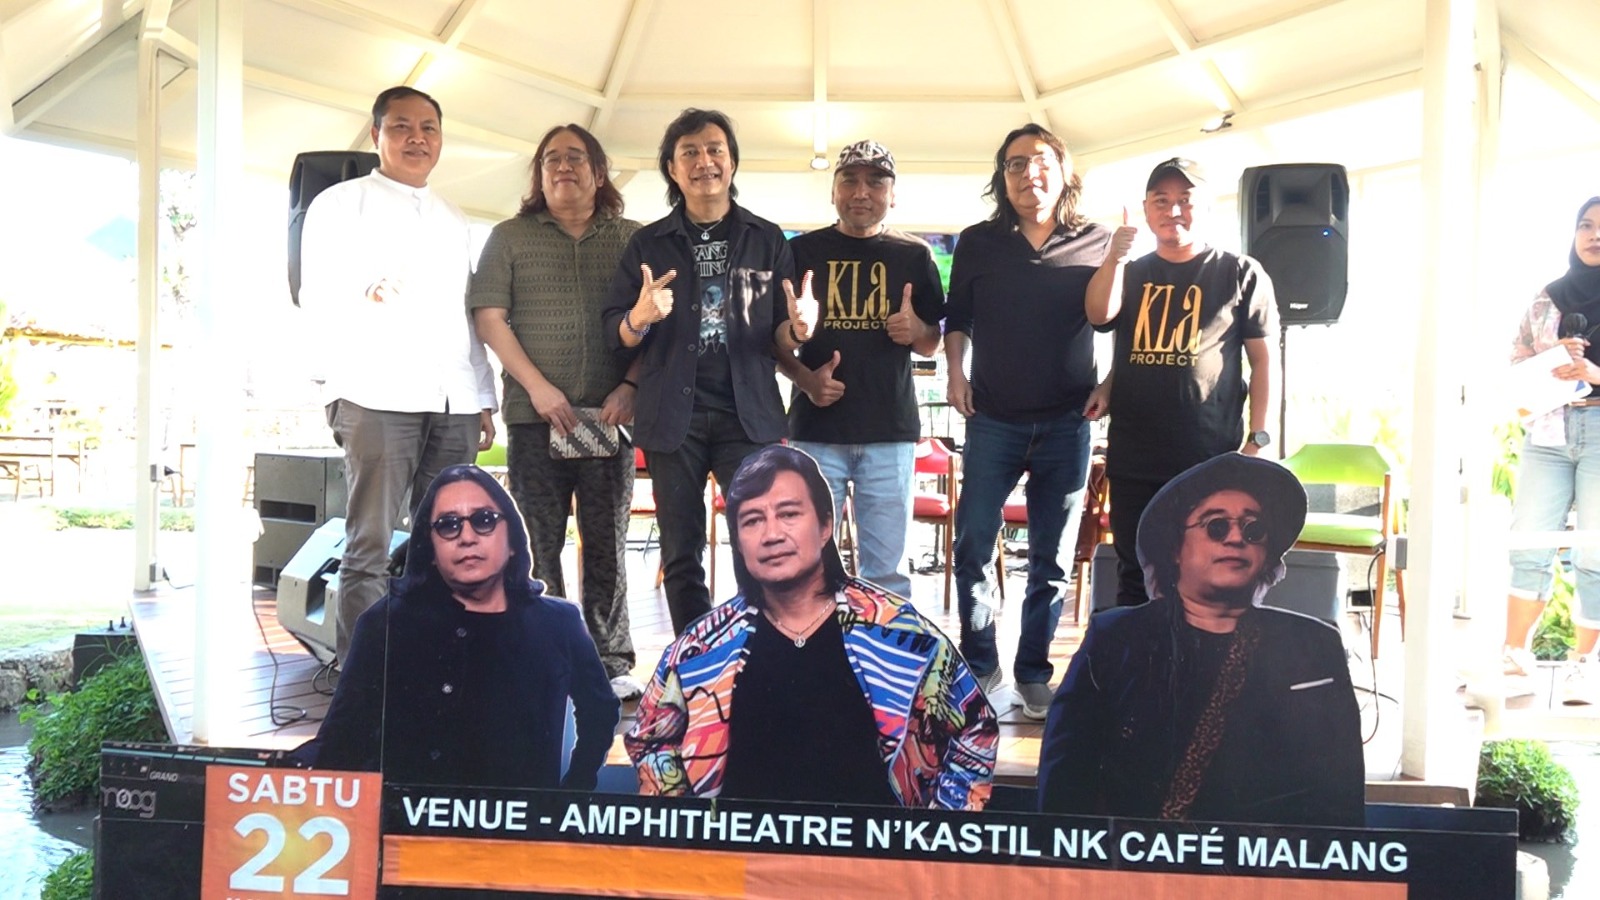 Janjikan Penampilan Megah dan Spektakuler Merayakan 35 Tahun Perjalanan Bermusik Kla Project di NK Cafe